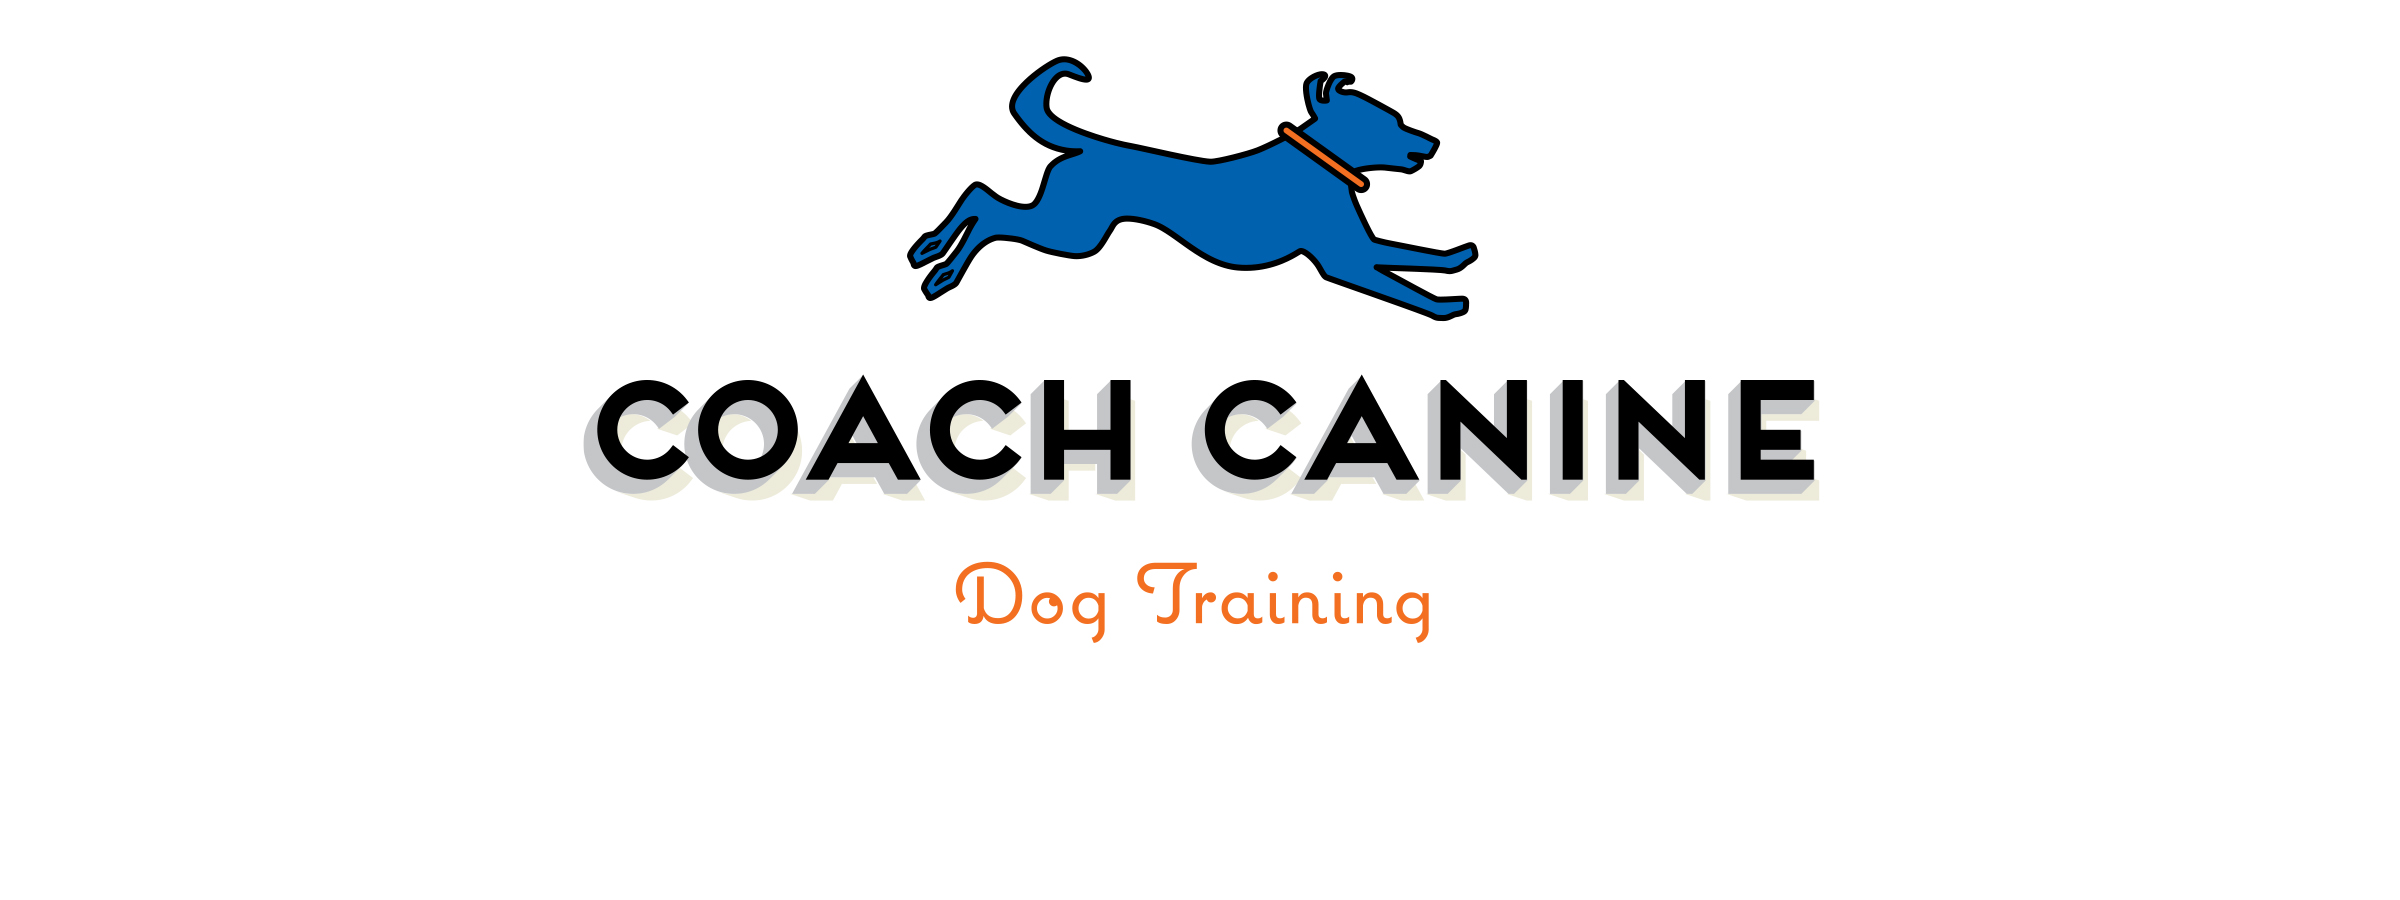 Coach Canine logo.jpg